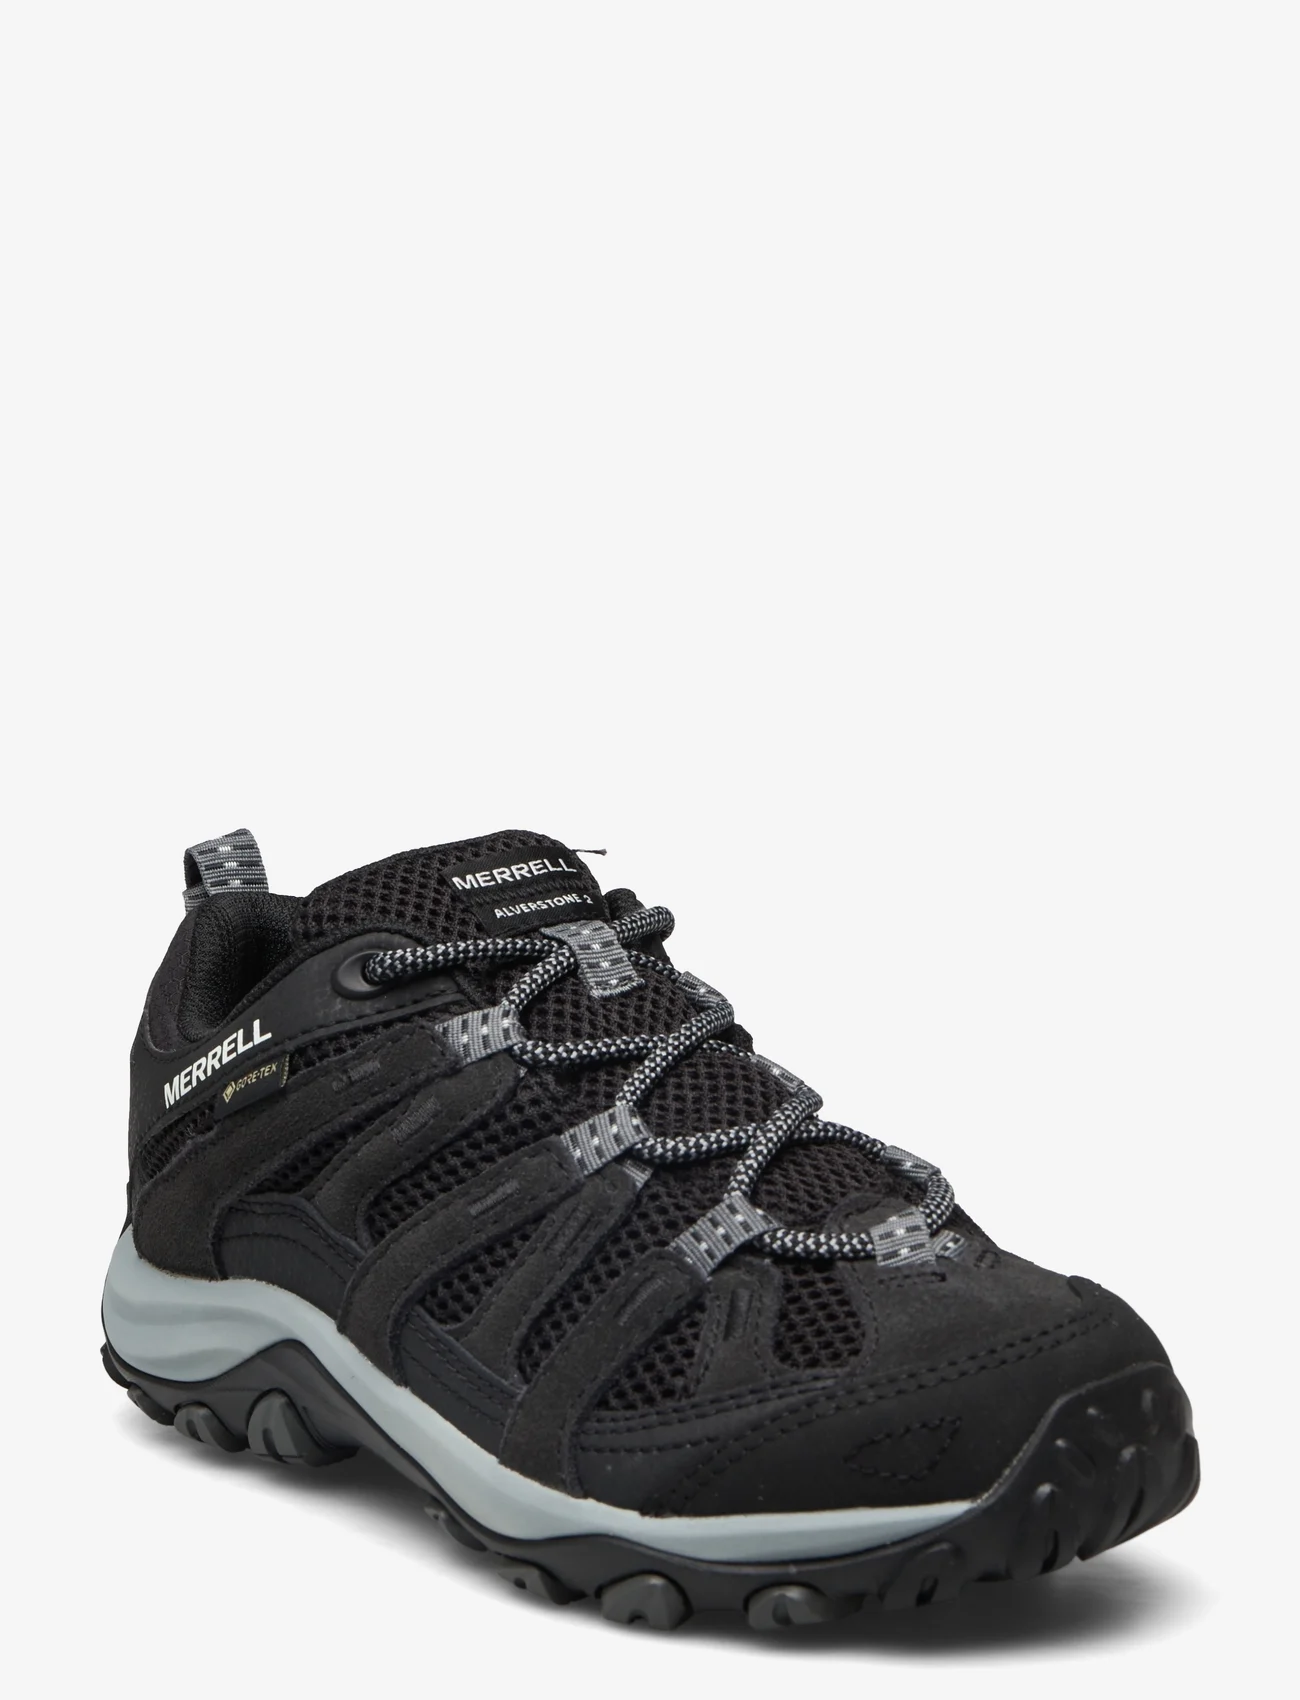 Merrell - Women's Alverstone 2 GTX - Black/Bl - hiking shoes - black/black - 0